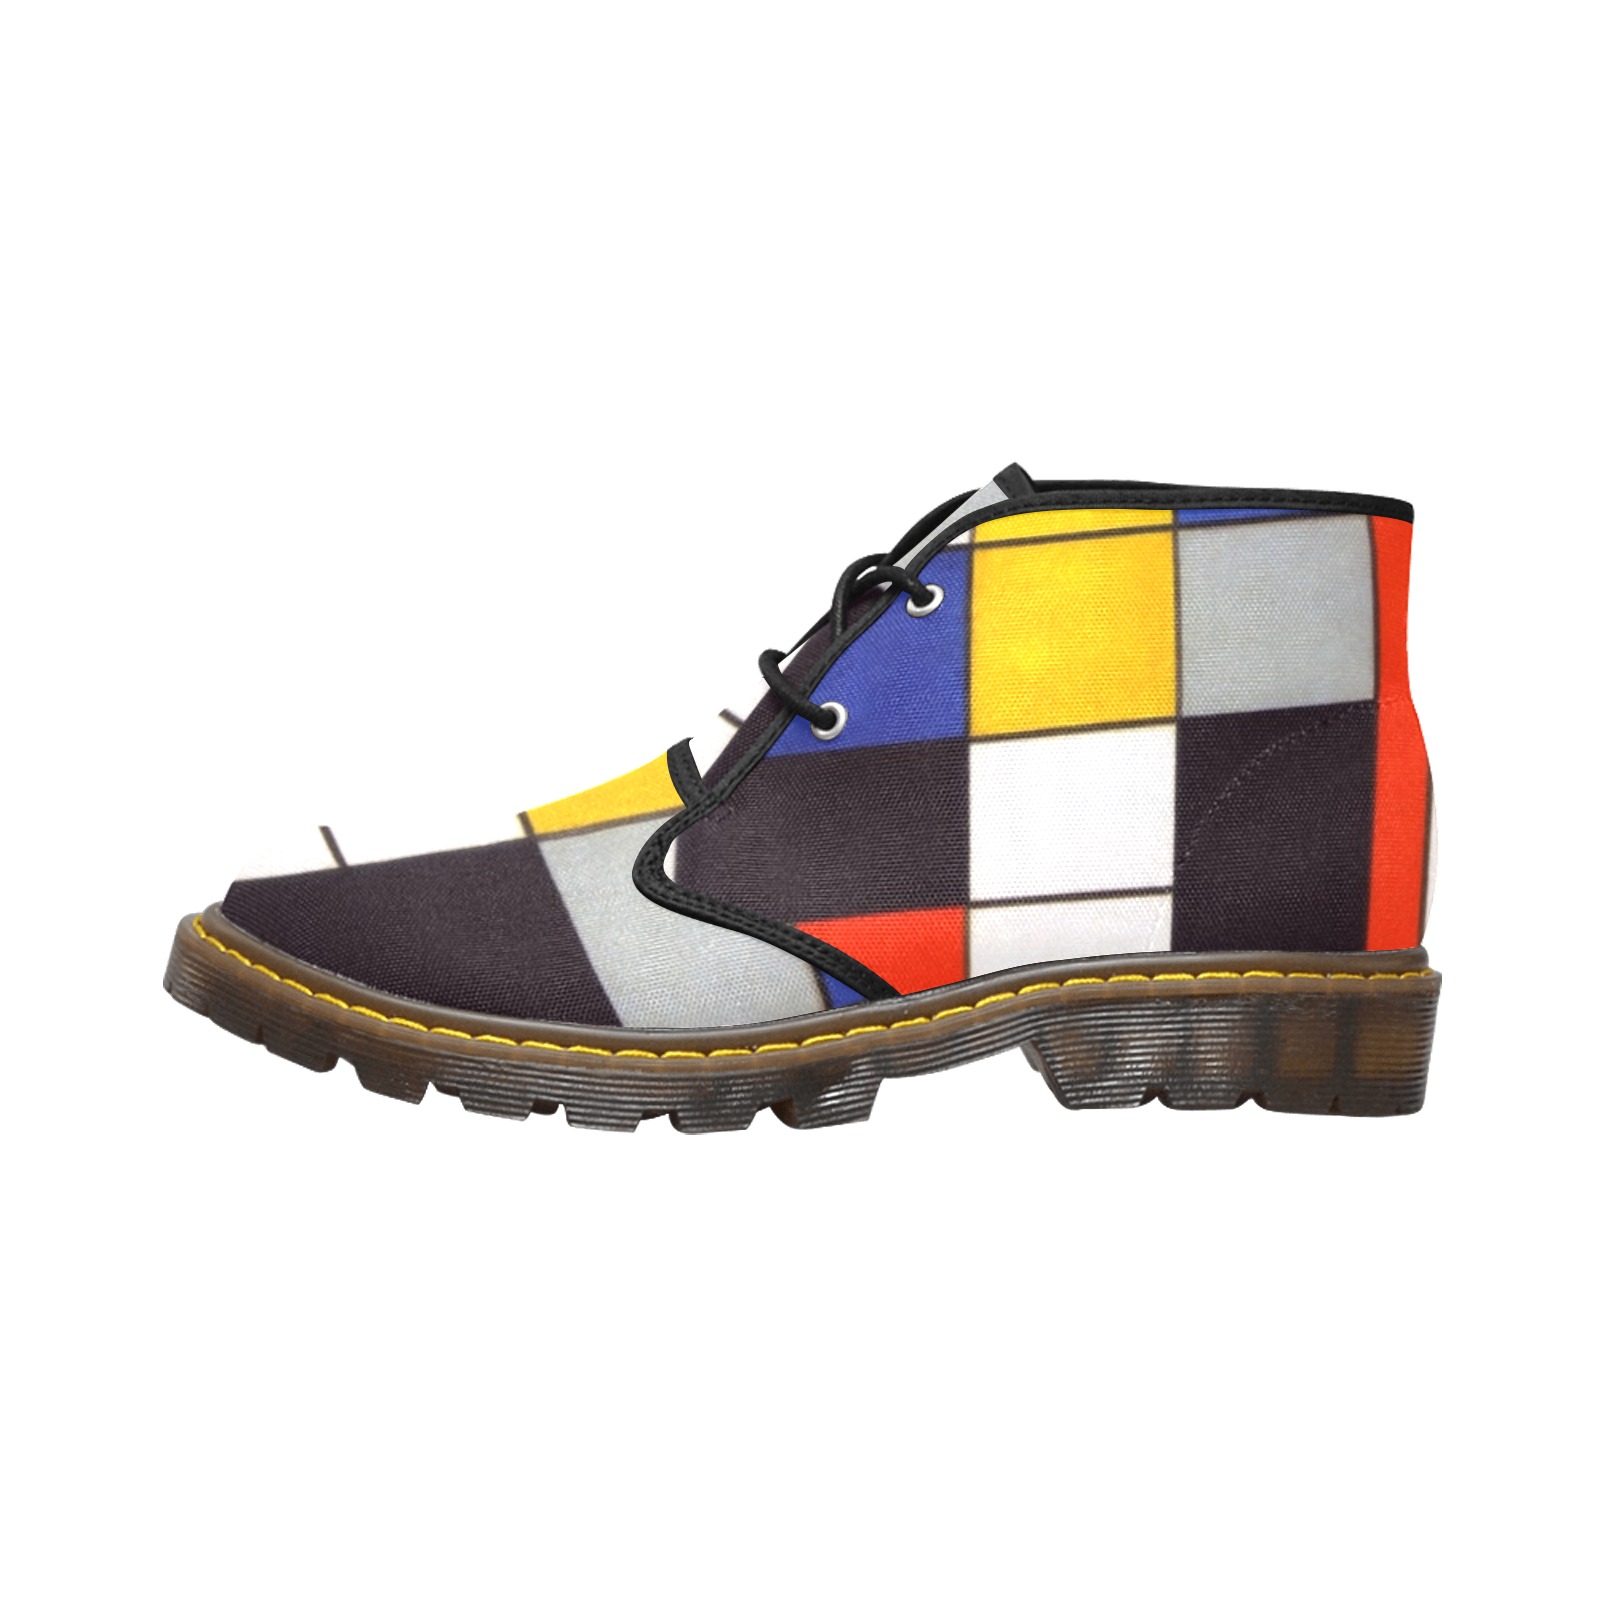 Composition A by Piet Mondrian Men's Canvas Chukka Boots (Model 2402-1)